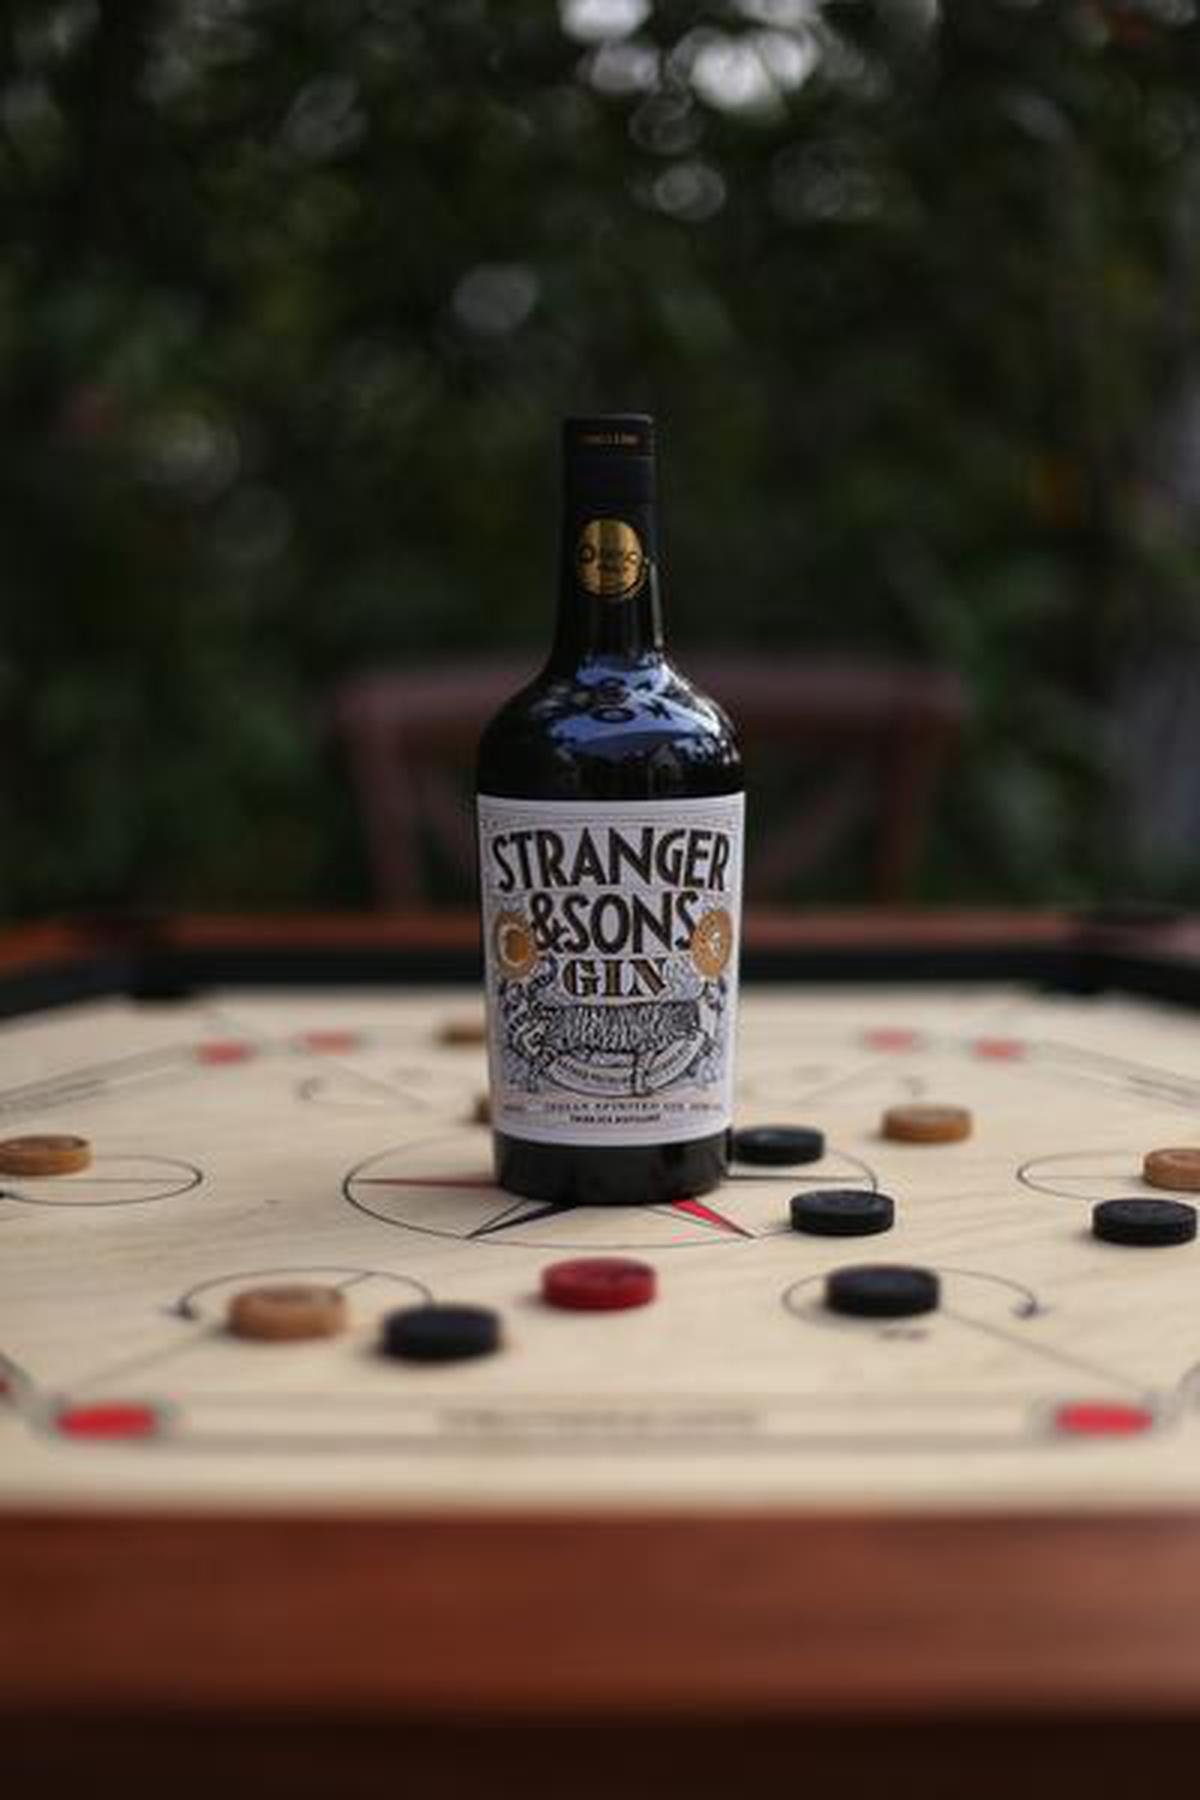 Stranger & Sons a debut spirit from Third Eye Distillery in Goa